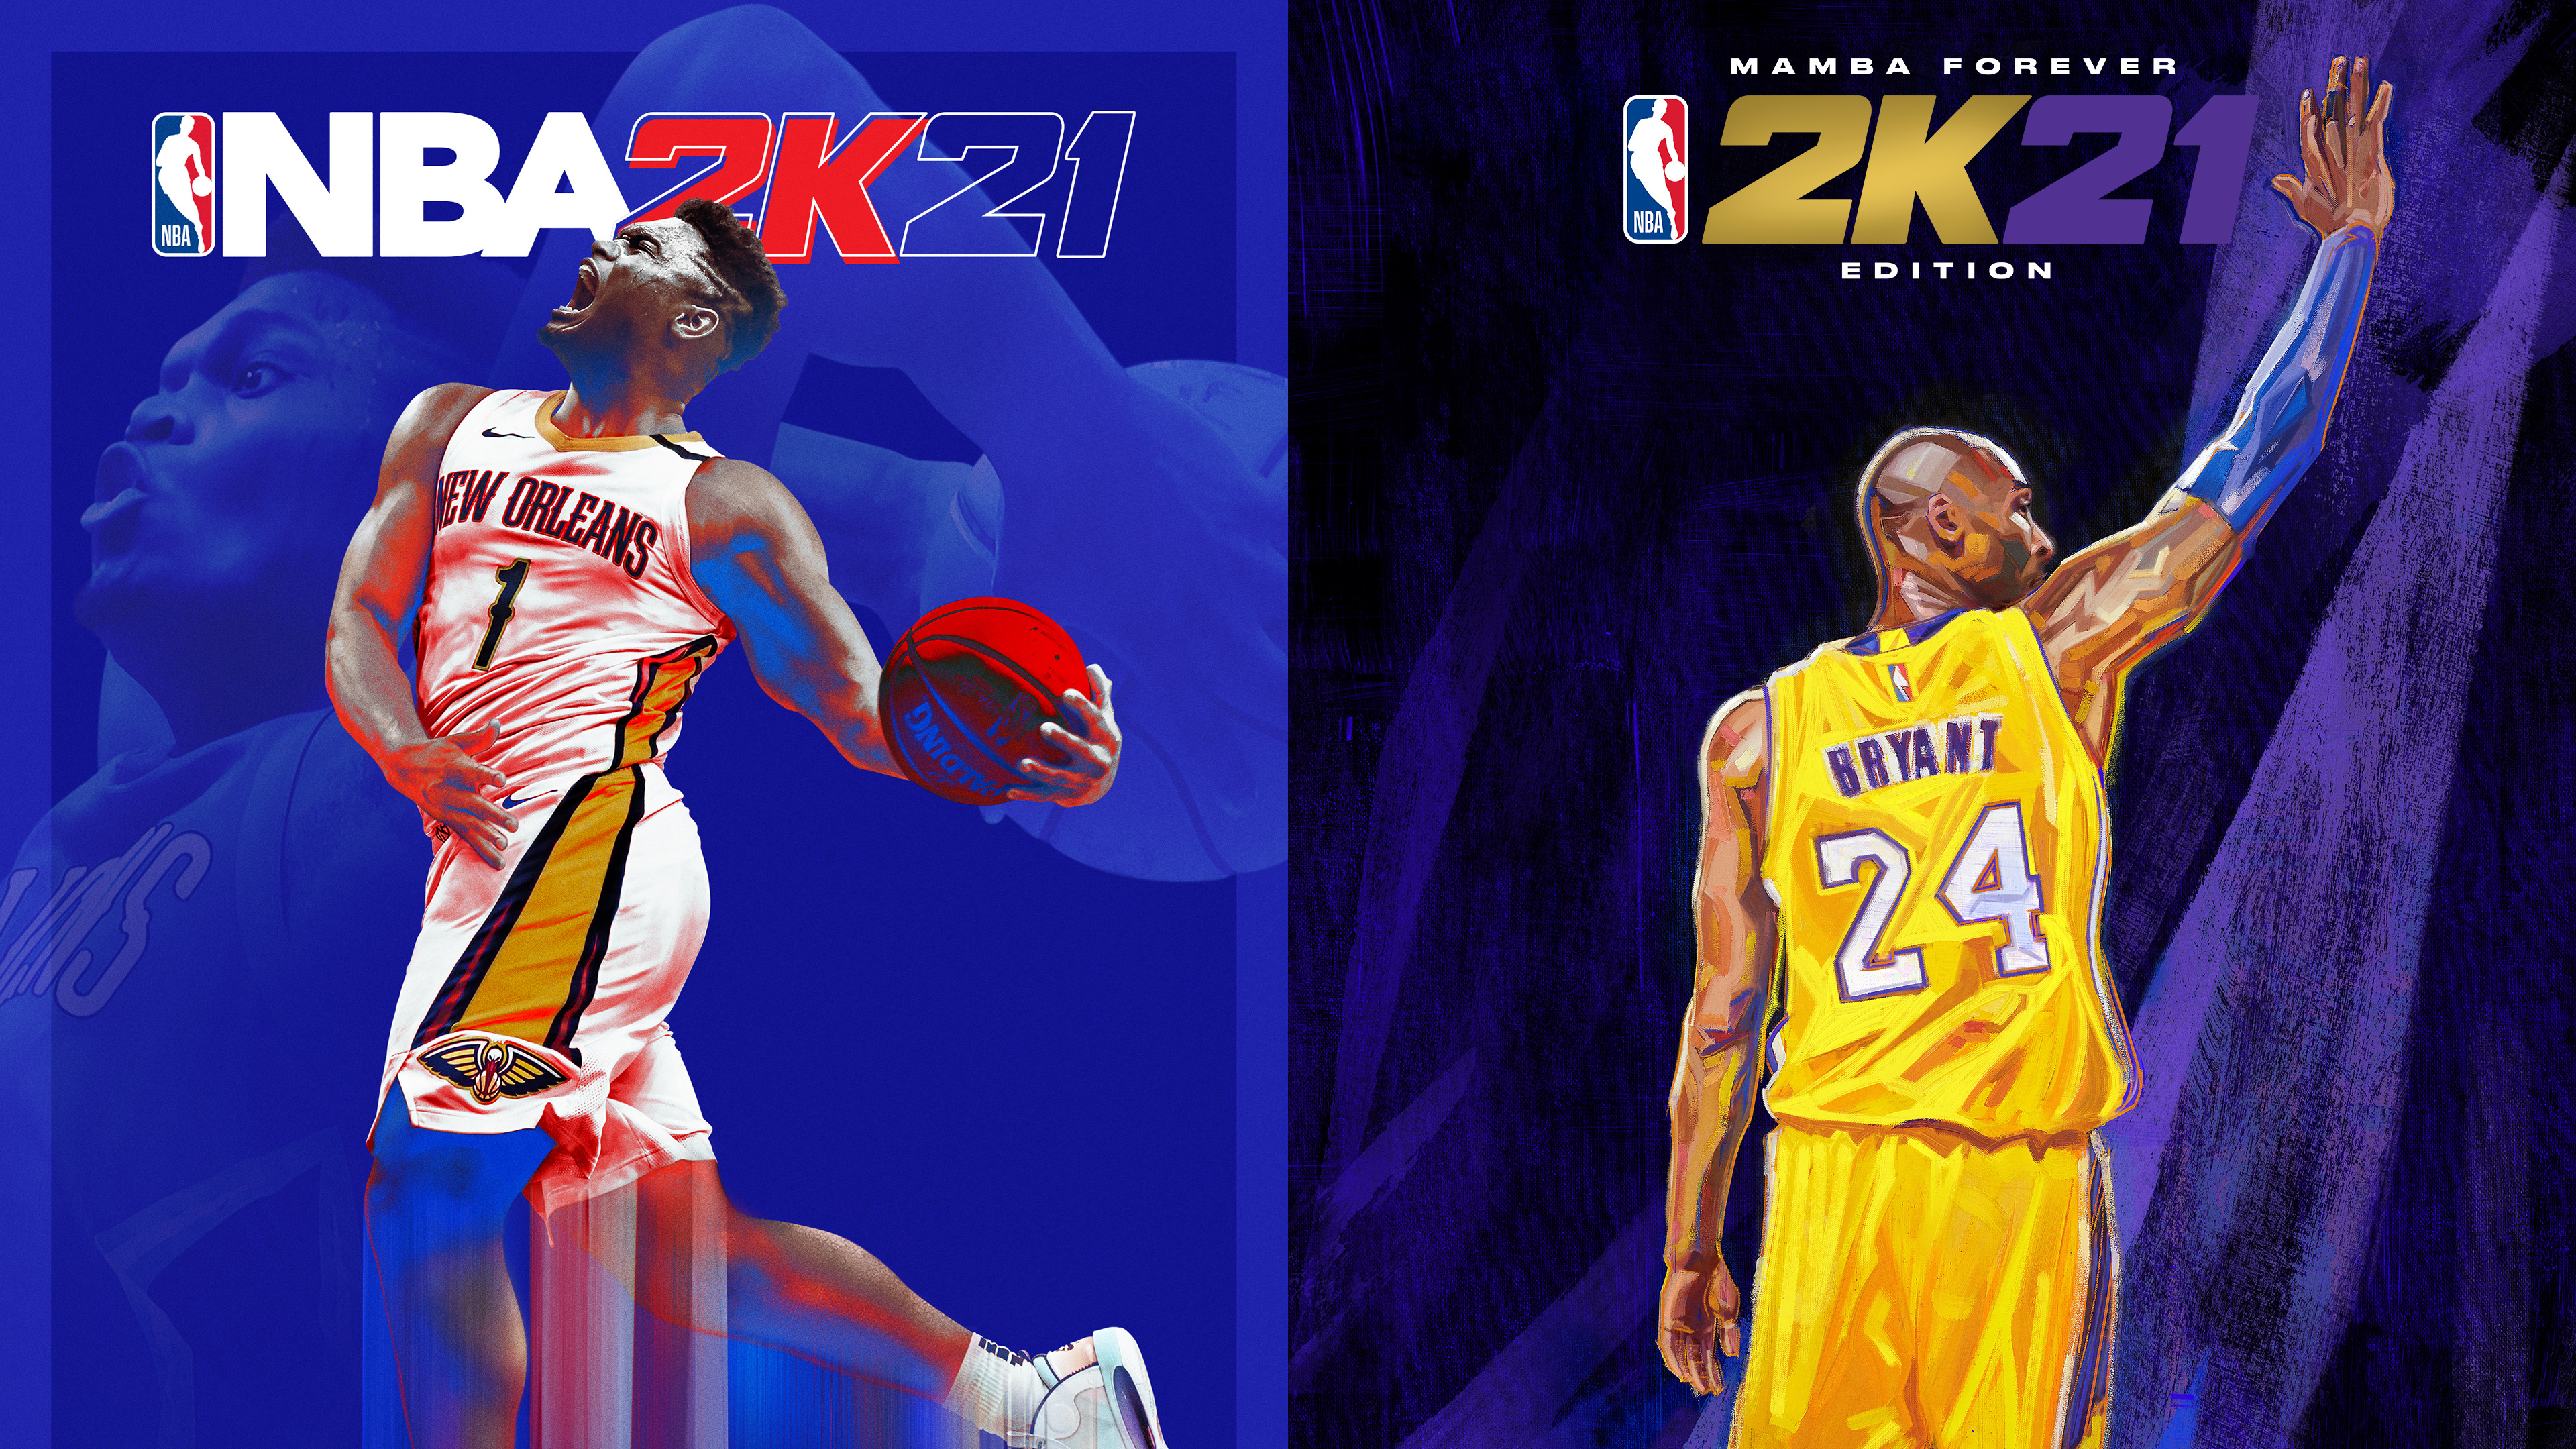 NBA2K Predicts the 2024 NBA Season! (Live Sim) 